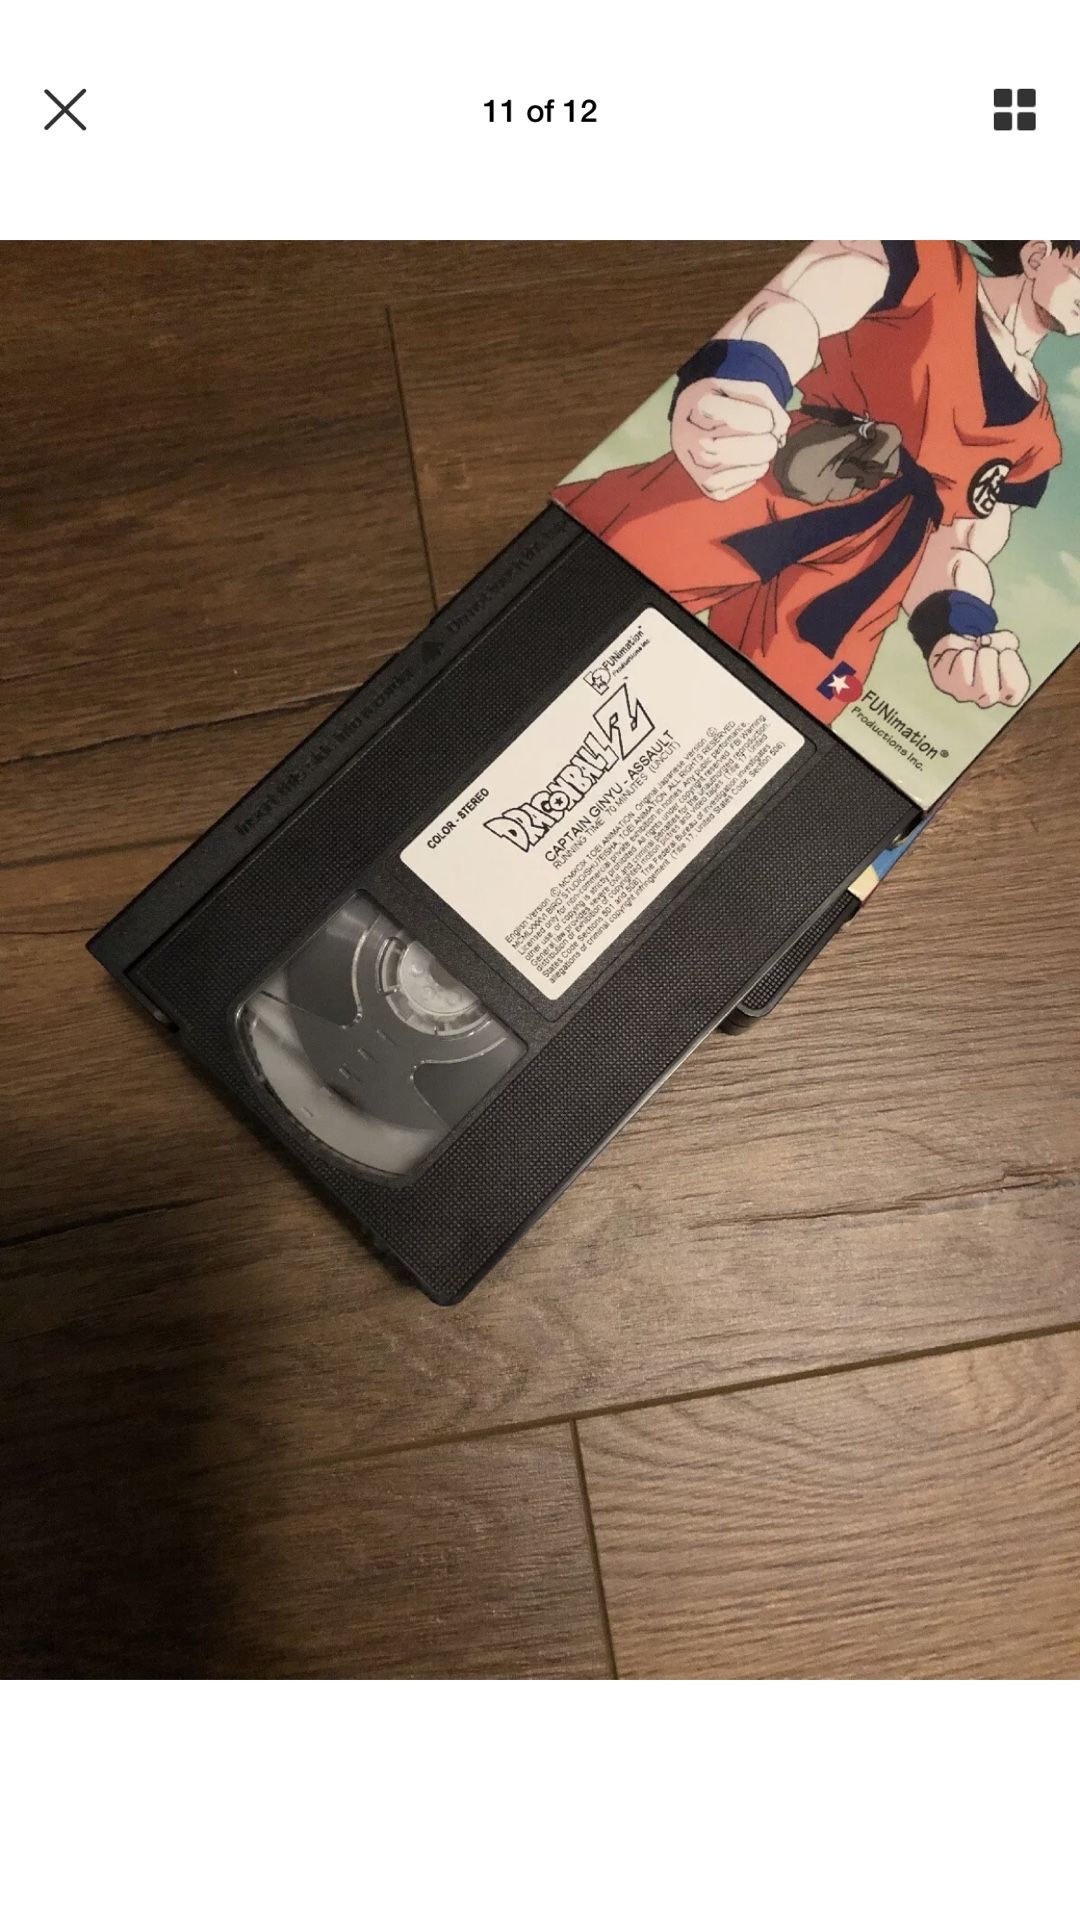 Dragon Ball Z: Frieza Saga Namek Saga Set Lot VHS Open Complete Sets  704400023132